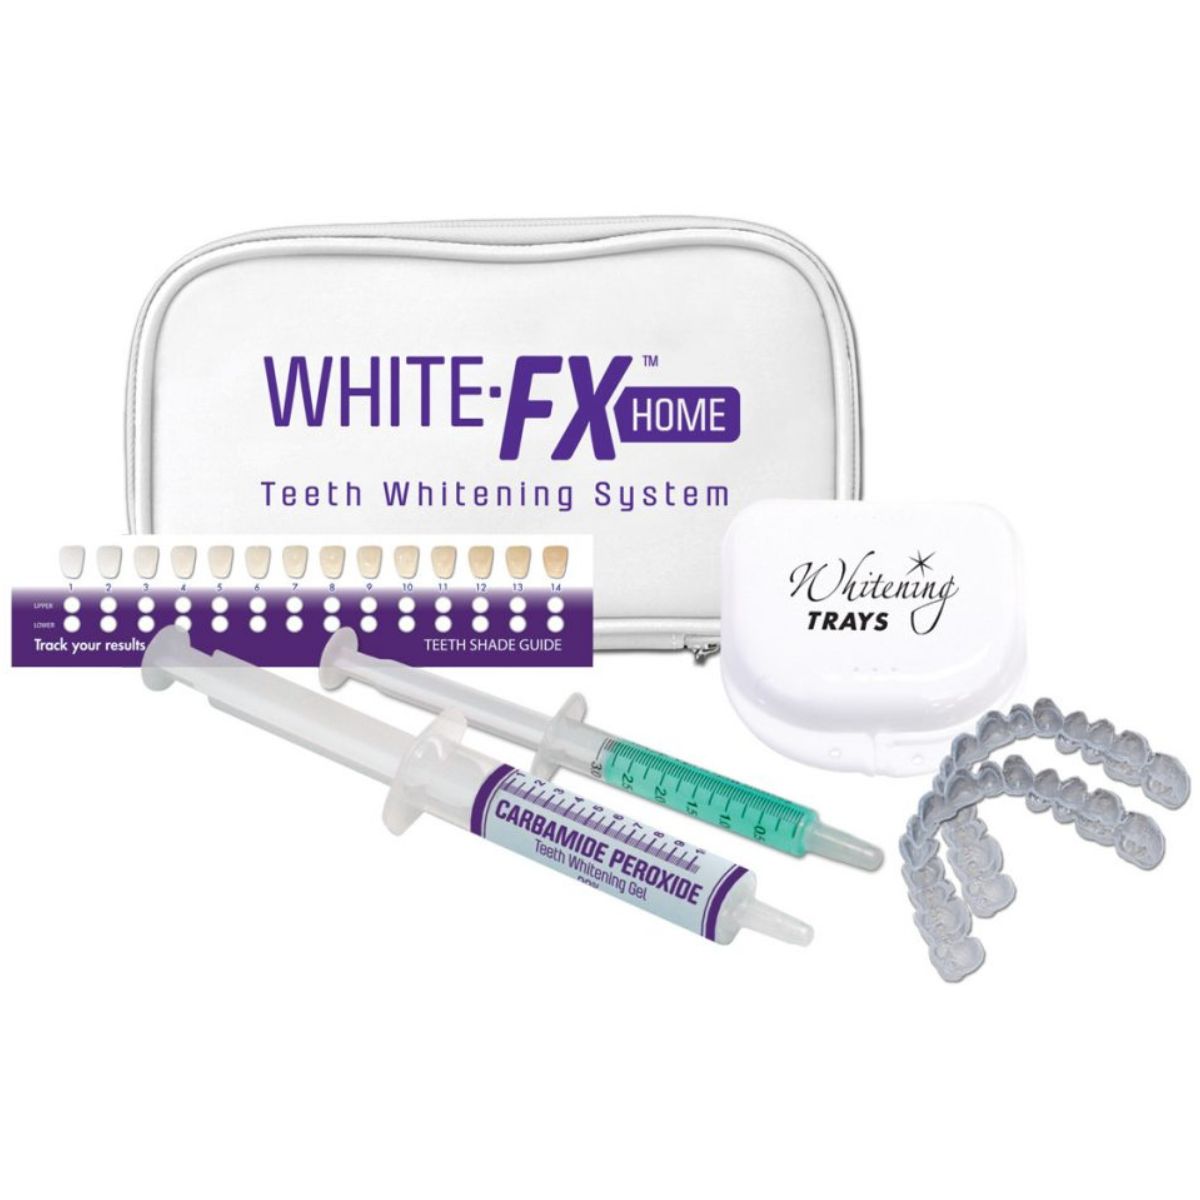 white-fx home teeth whitening system